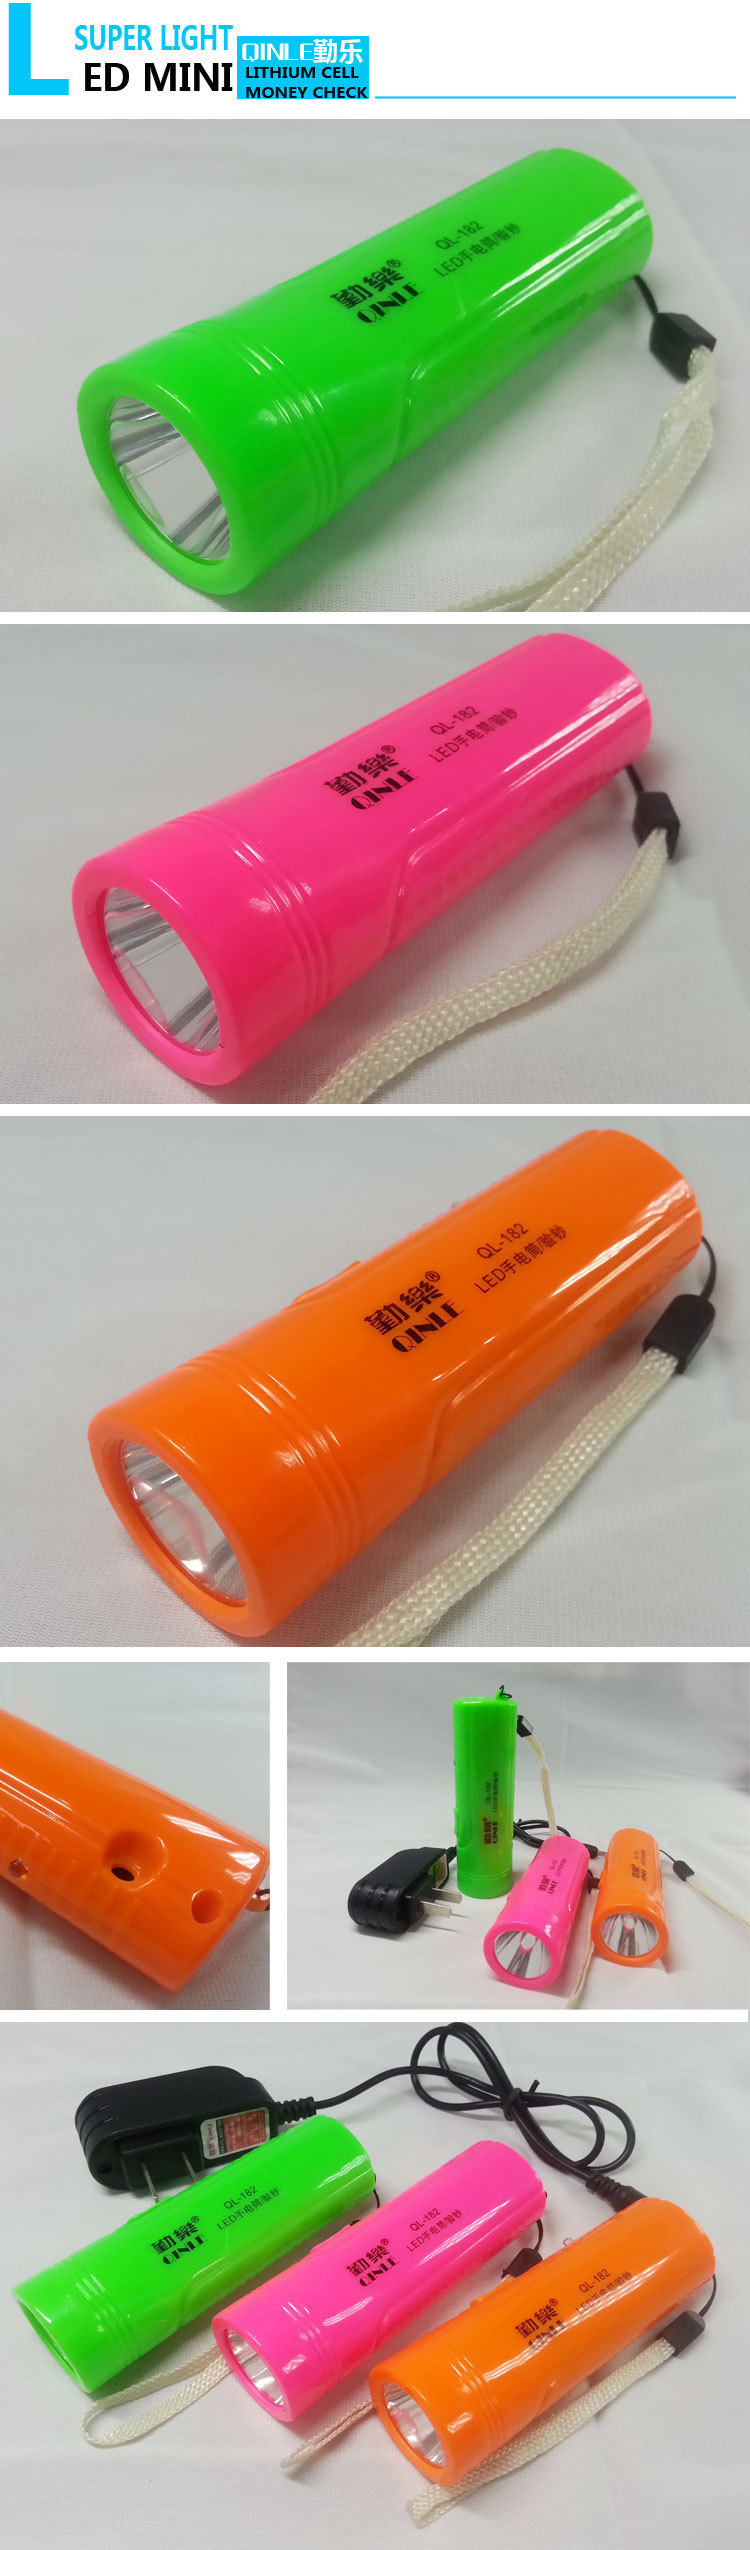 QL-182 LED 塑料礼品创意随身MINI迷你尔锂电验钞灯小手电筒示例图4